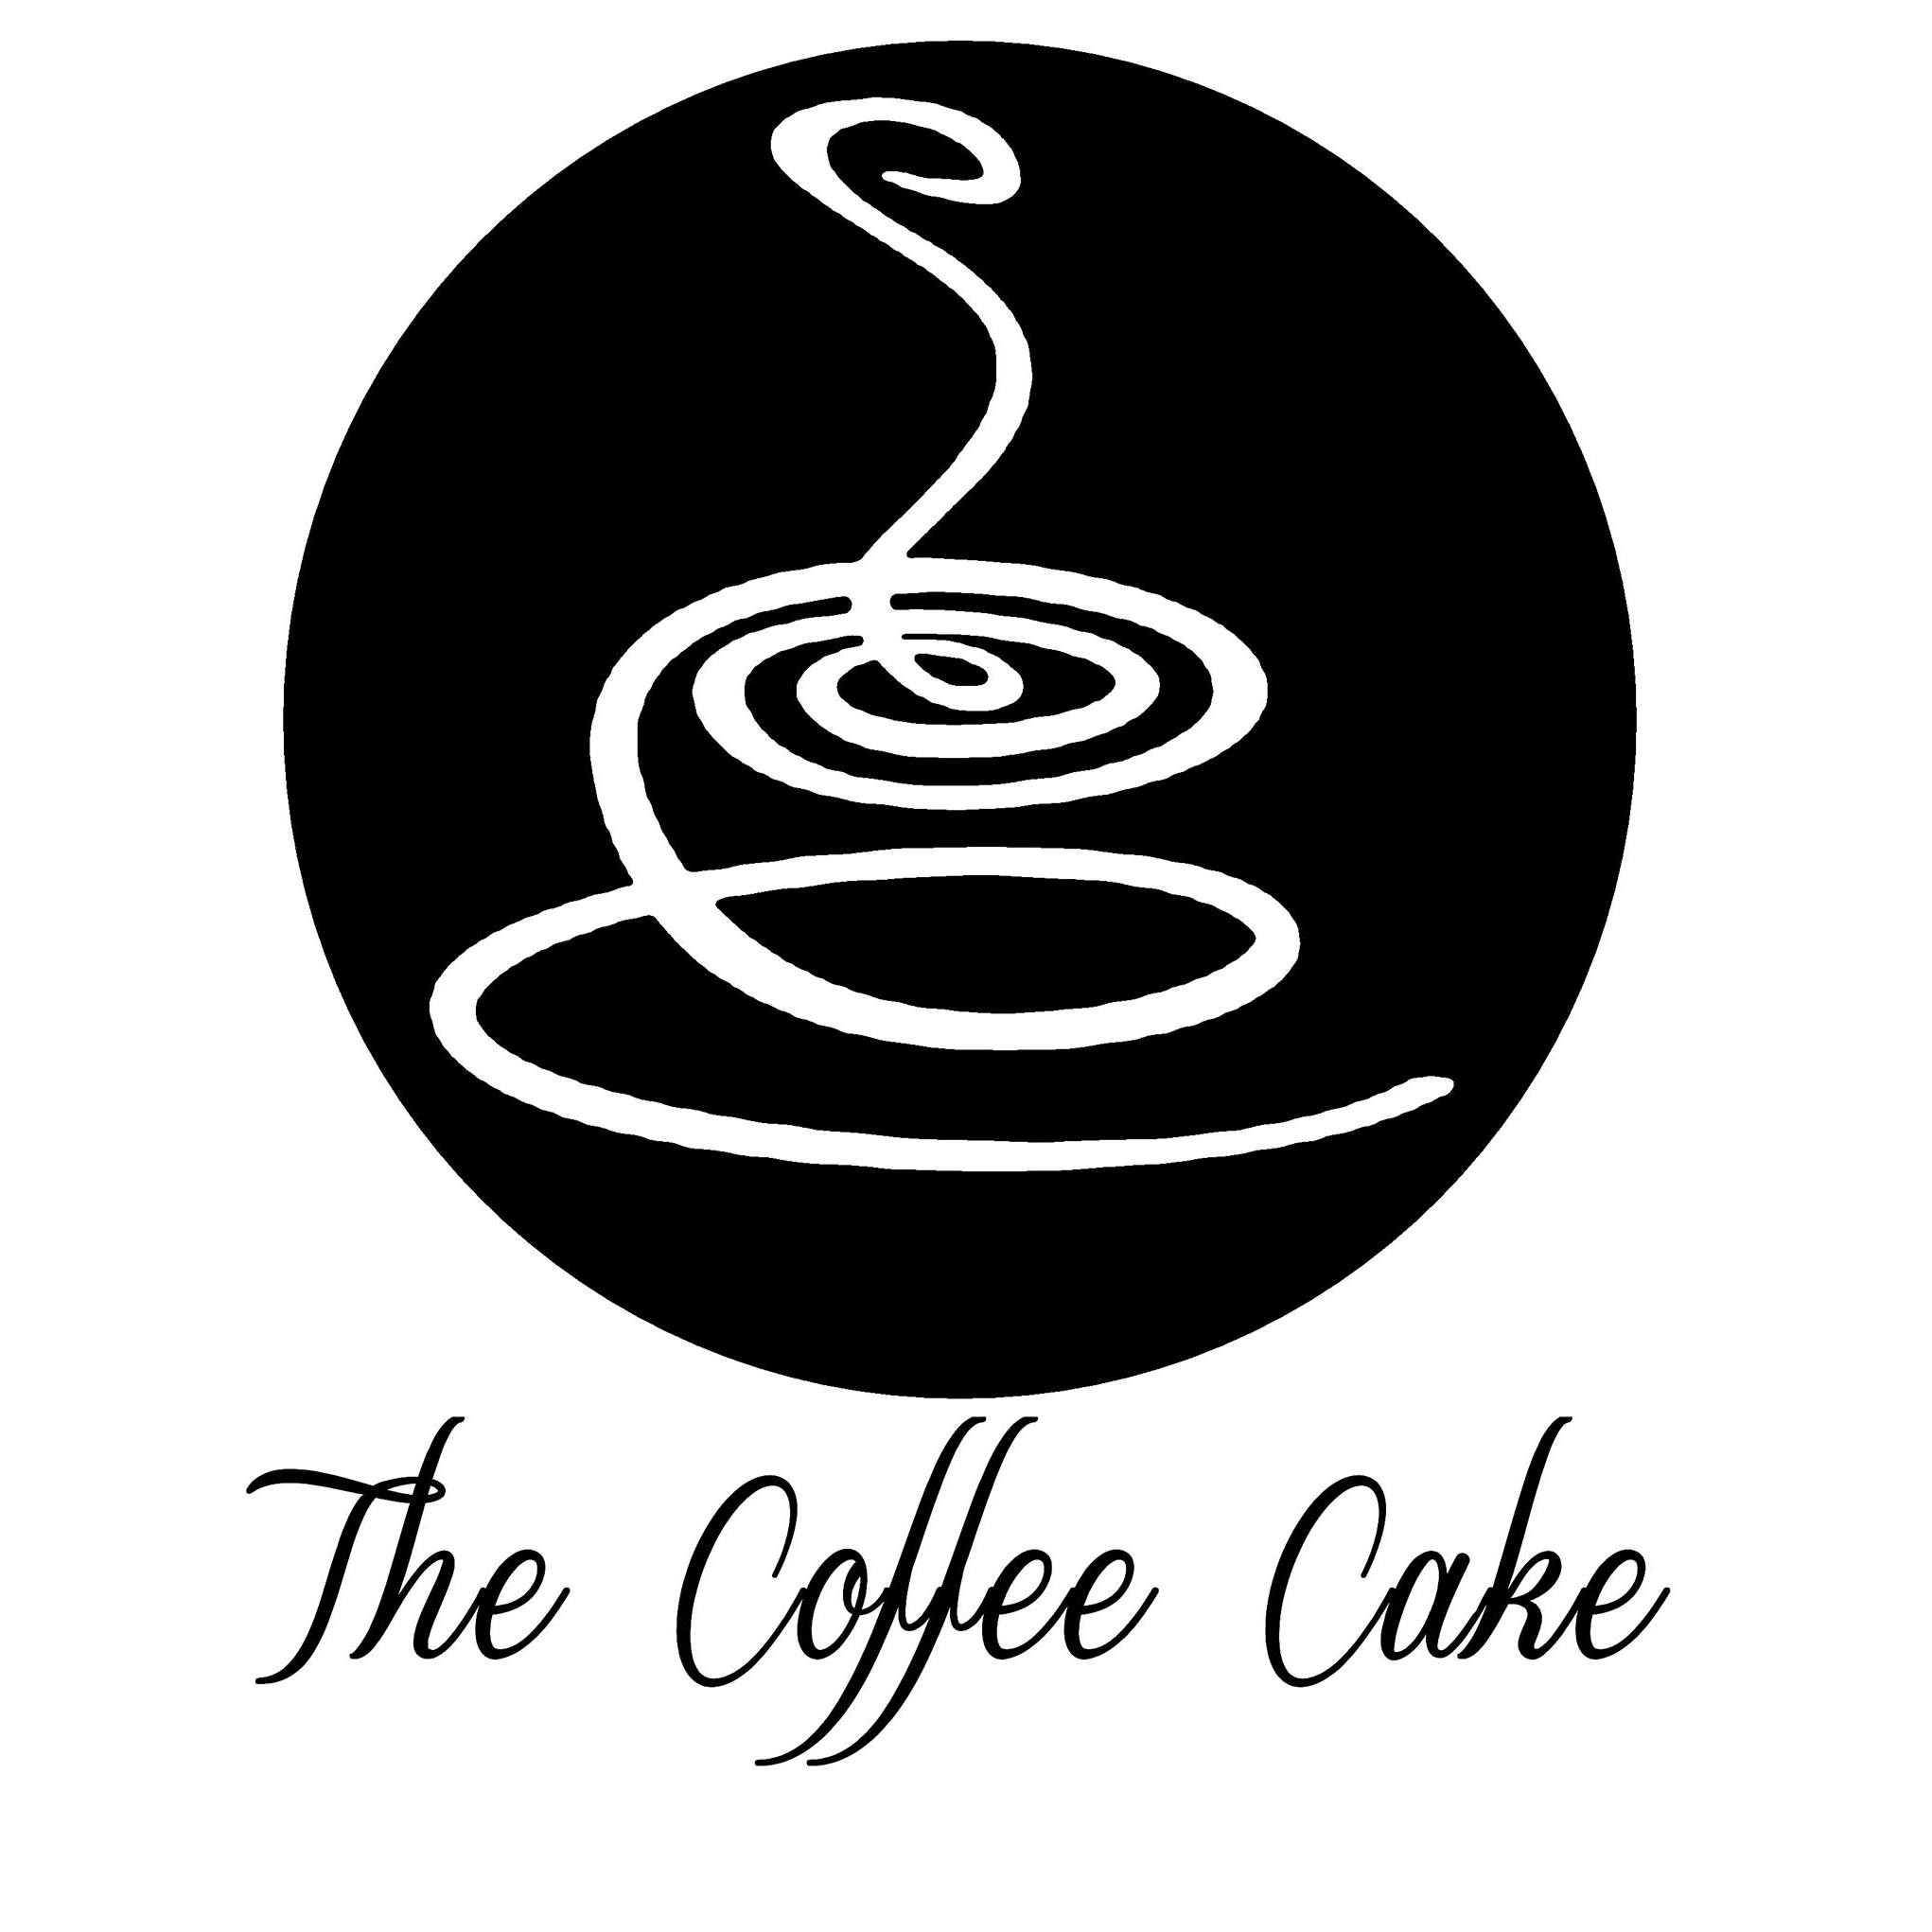 The Coffee Cake